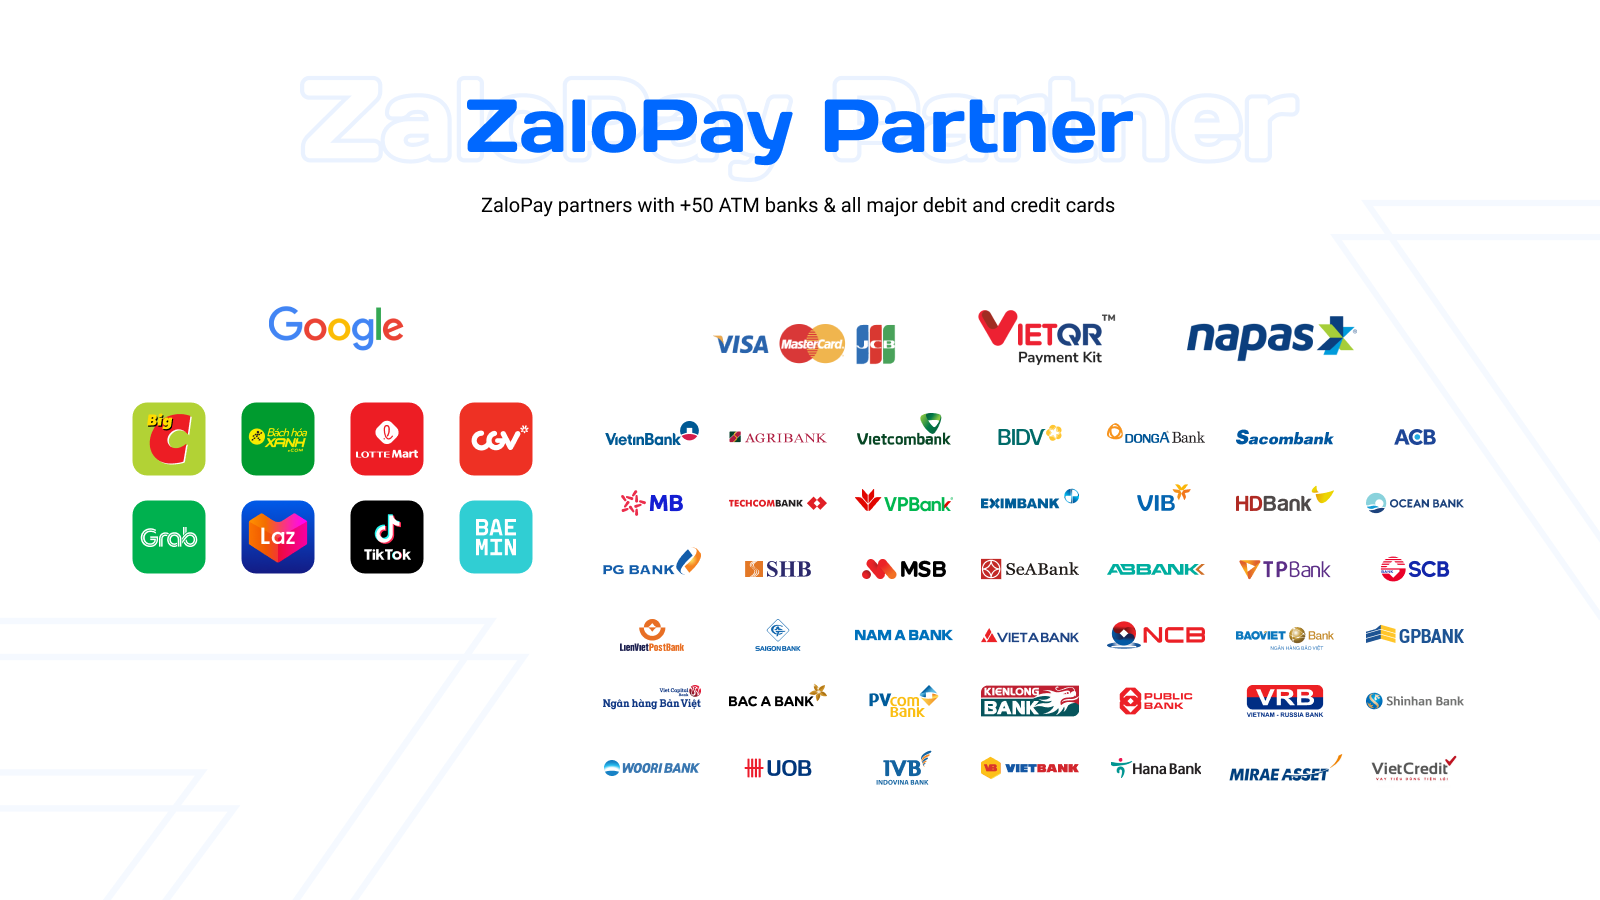 ZaloPay partners